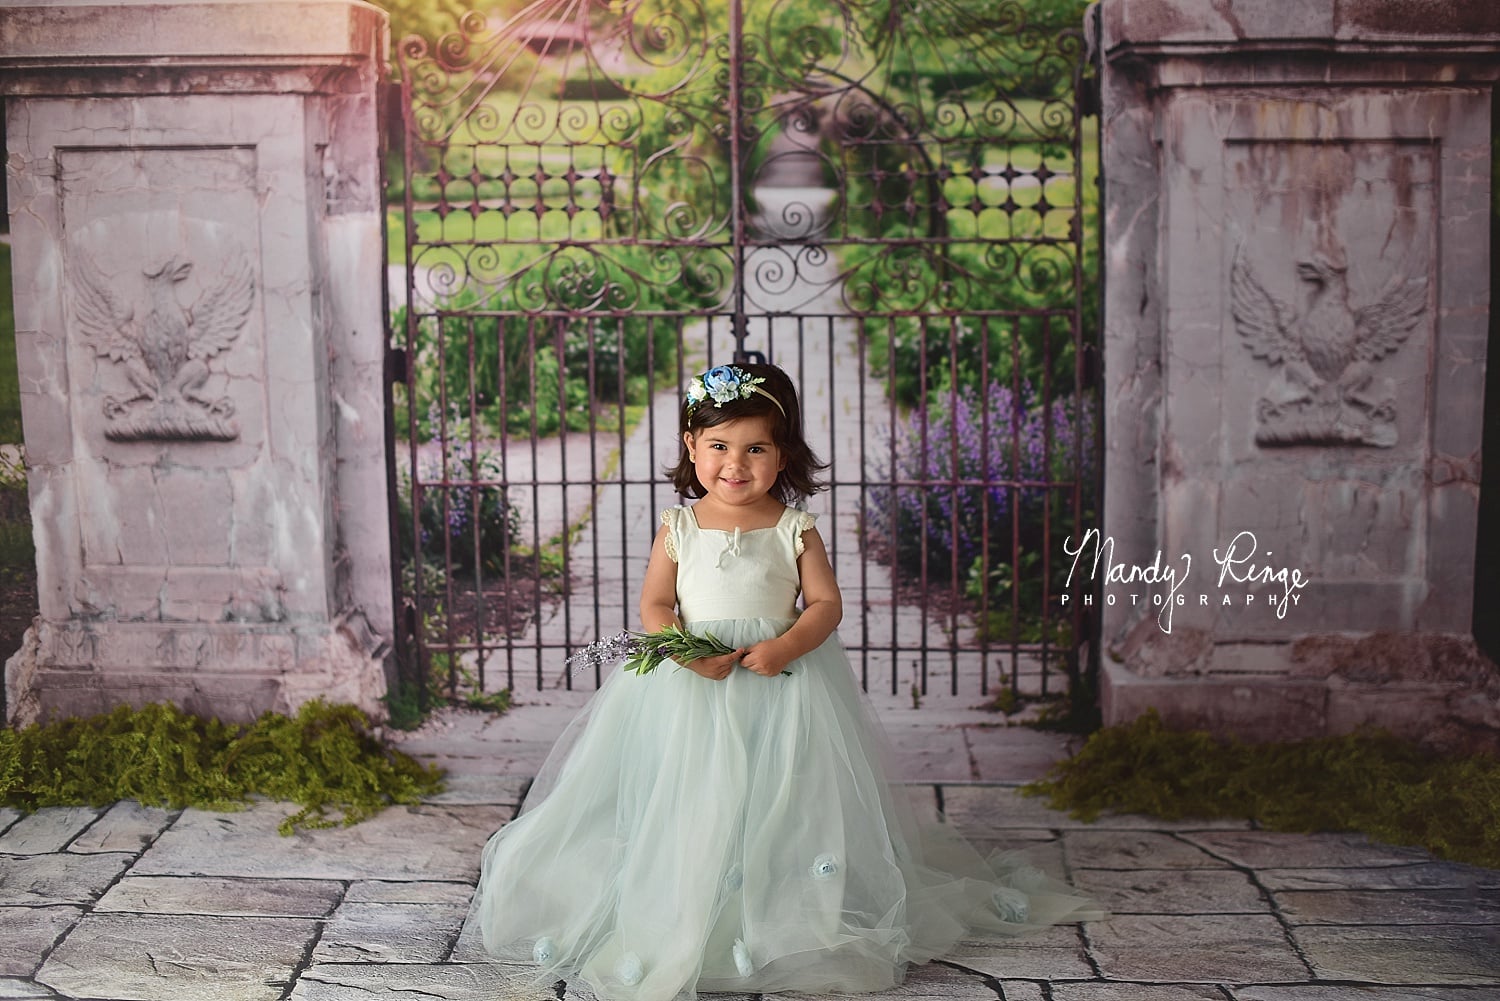 Kate Summer Wedding  Garden Gate Backdrop Designed by Mandy Ringe Photography